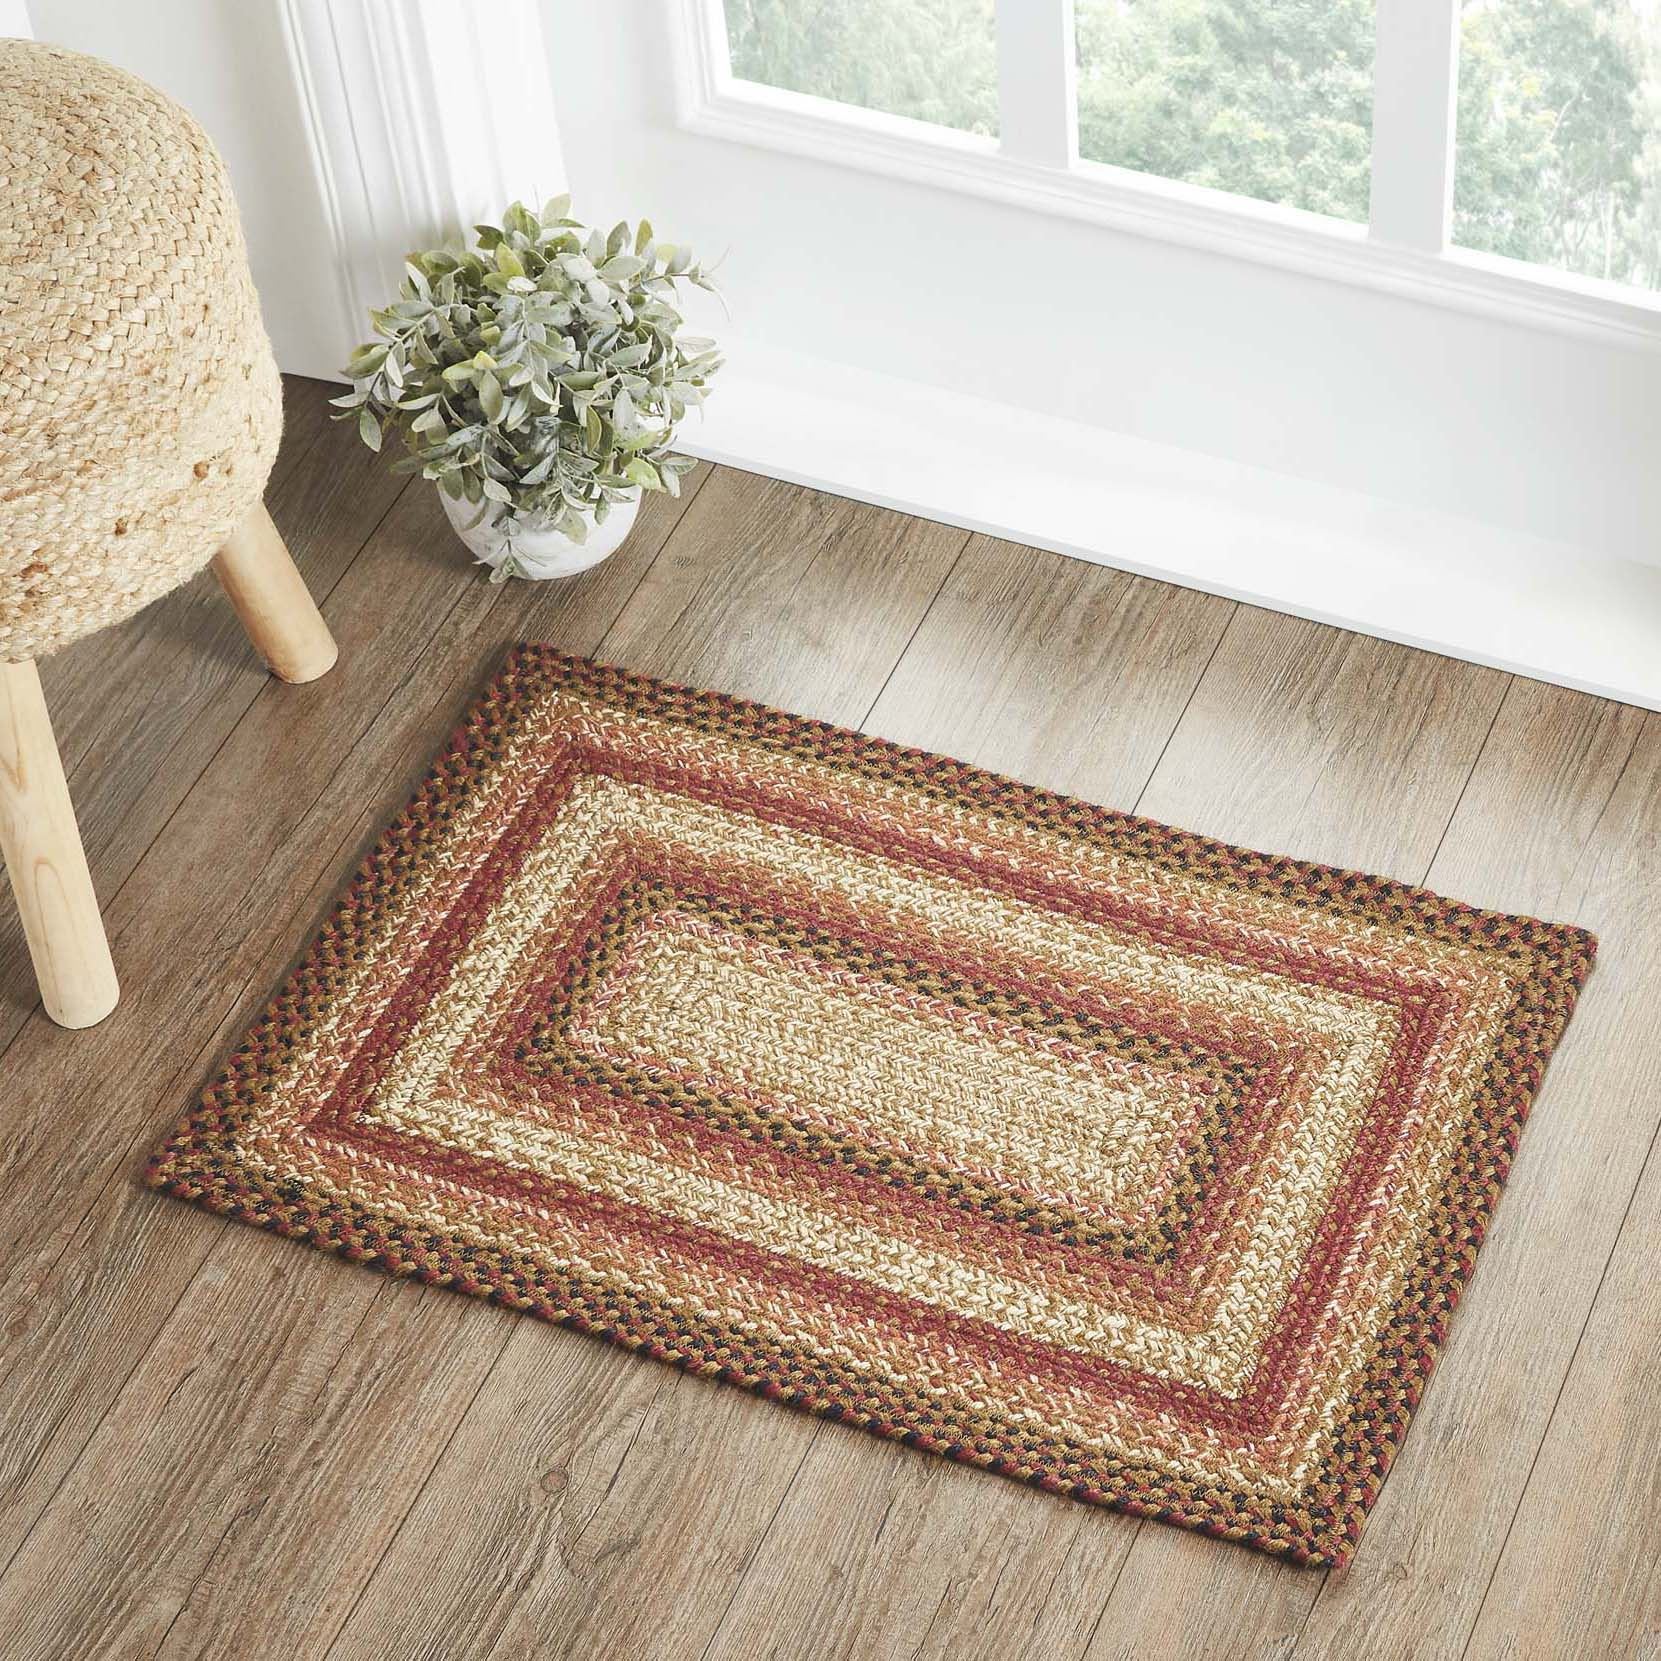 Ginger Spice rectangle braided rug